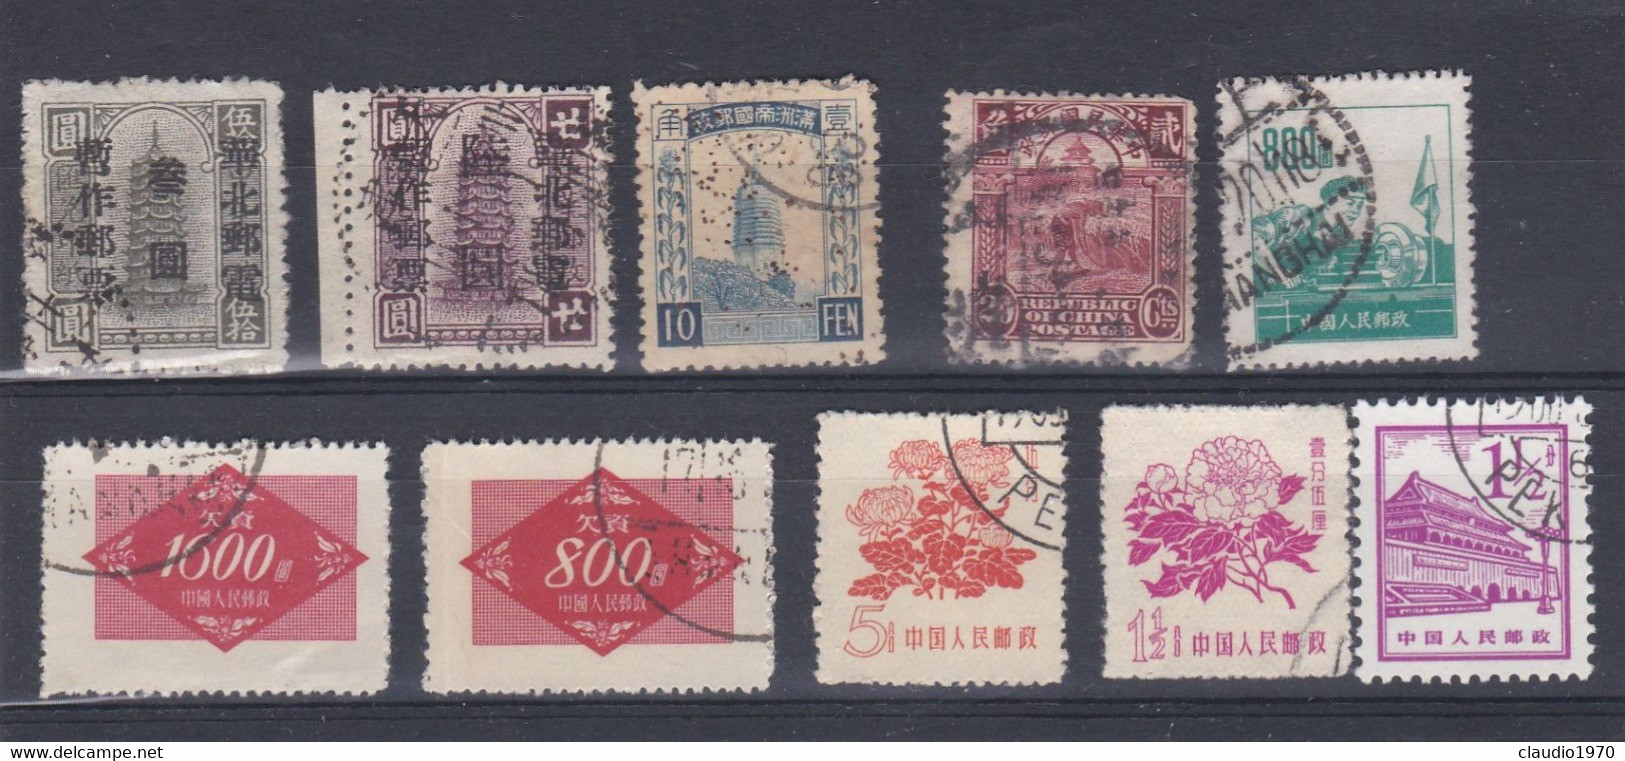 CINA - CHINA - CHINE - N° 155 - LOTTO DI 10 FRANCONBOLLI - USATI - Used Stamps